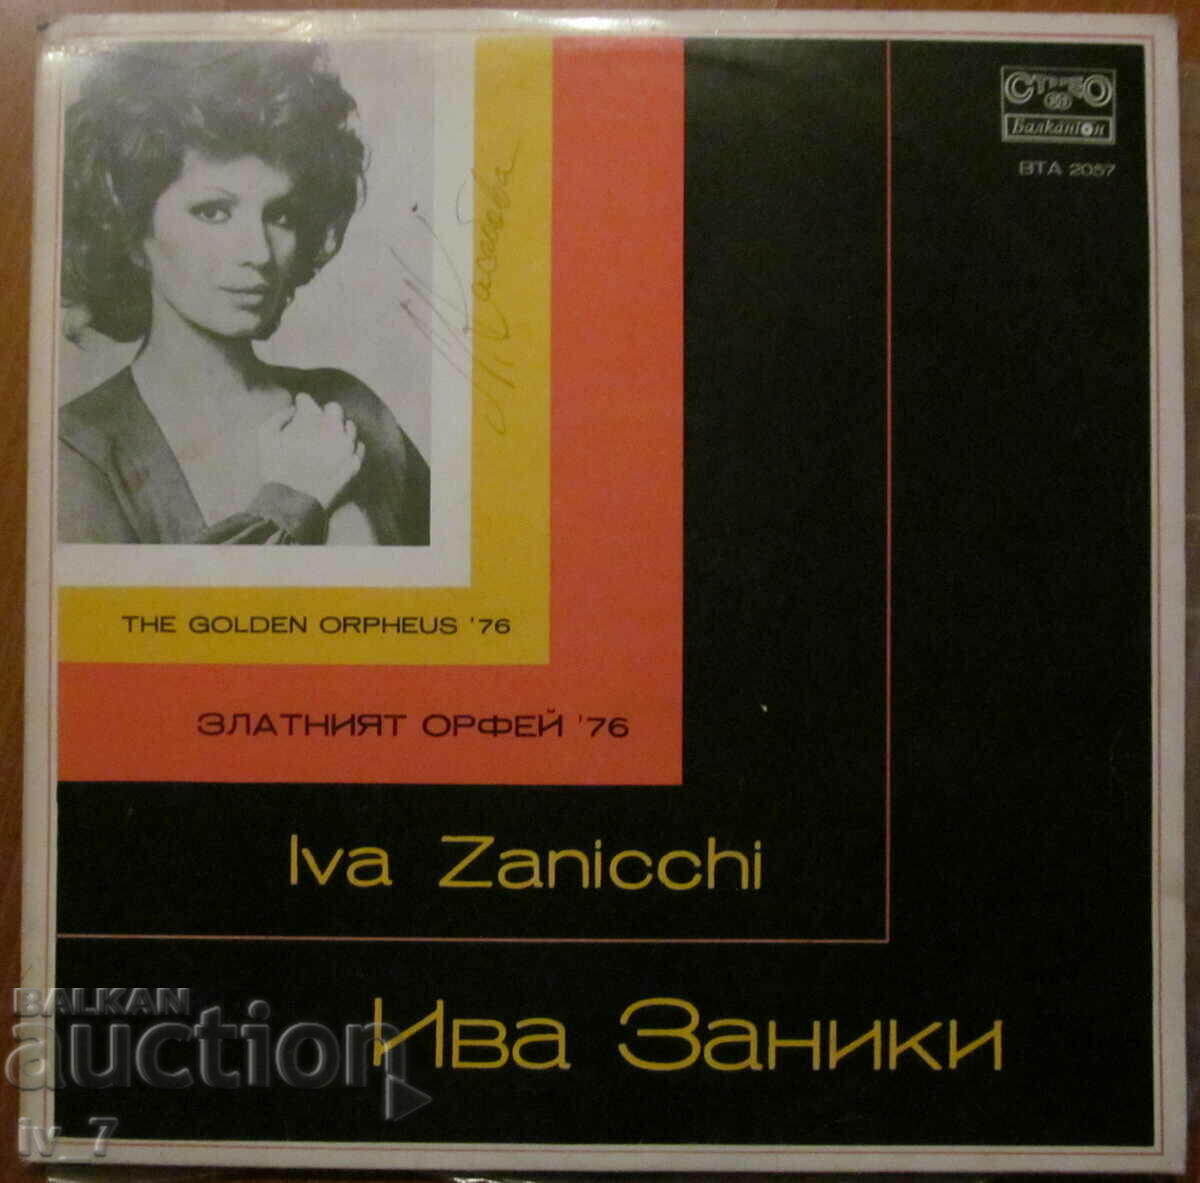 RECORD - IVA ZANIKI, large format